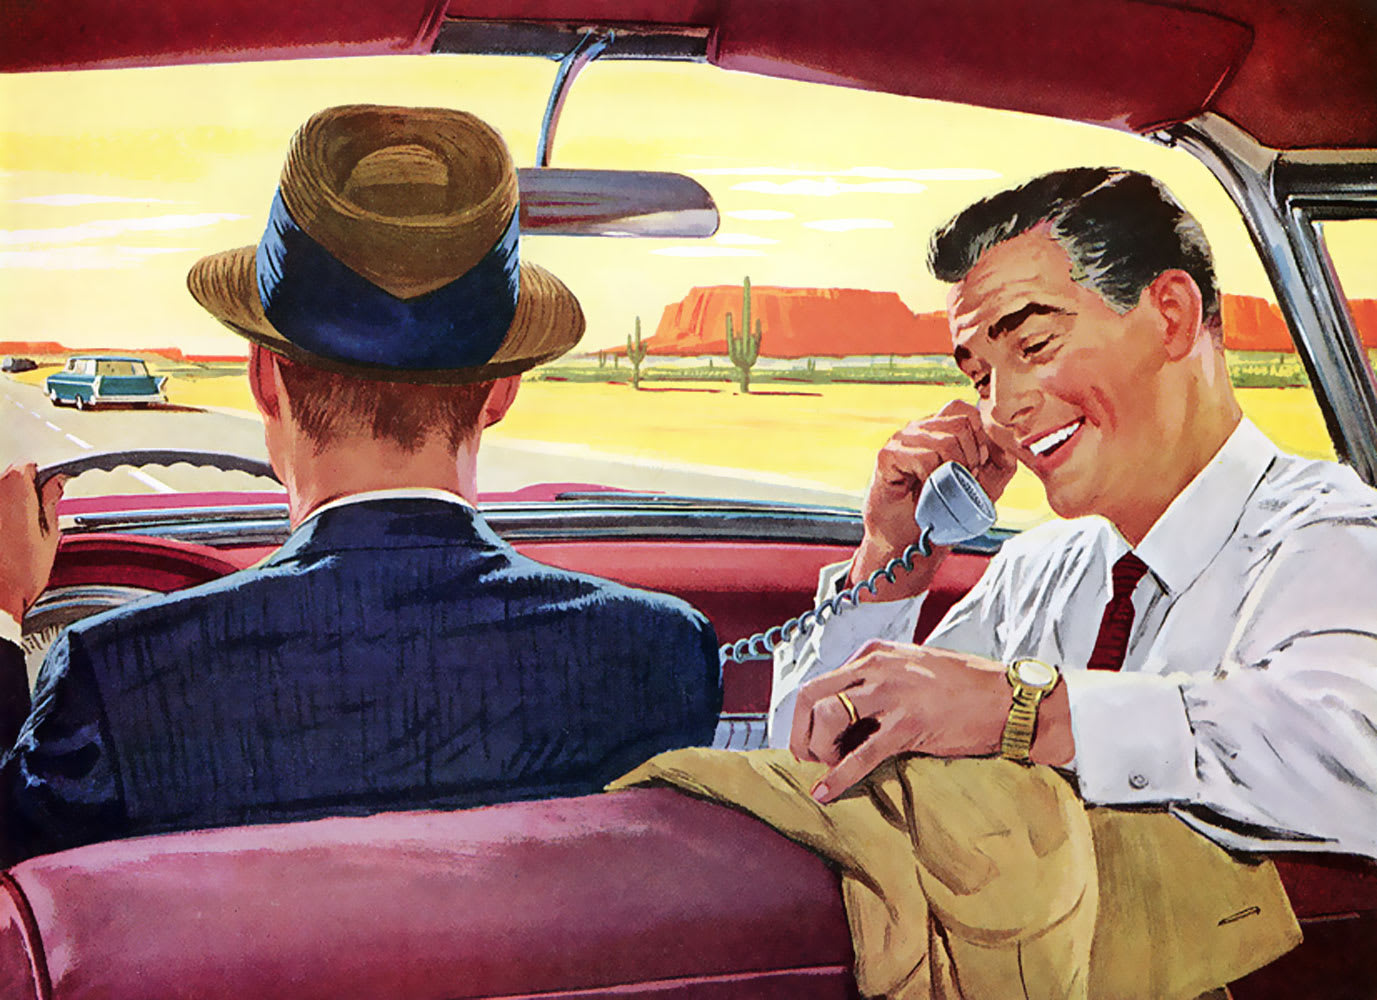 Car phone late 1950s. No shoulder seat belts.